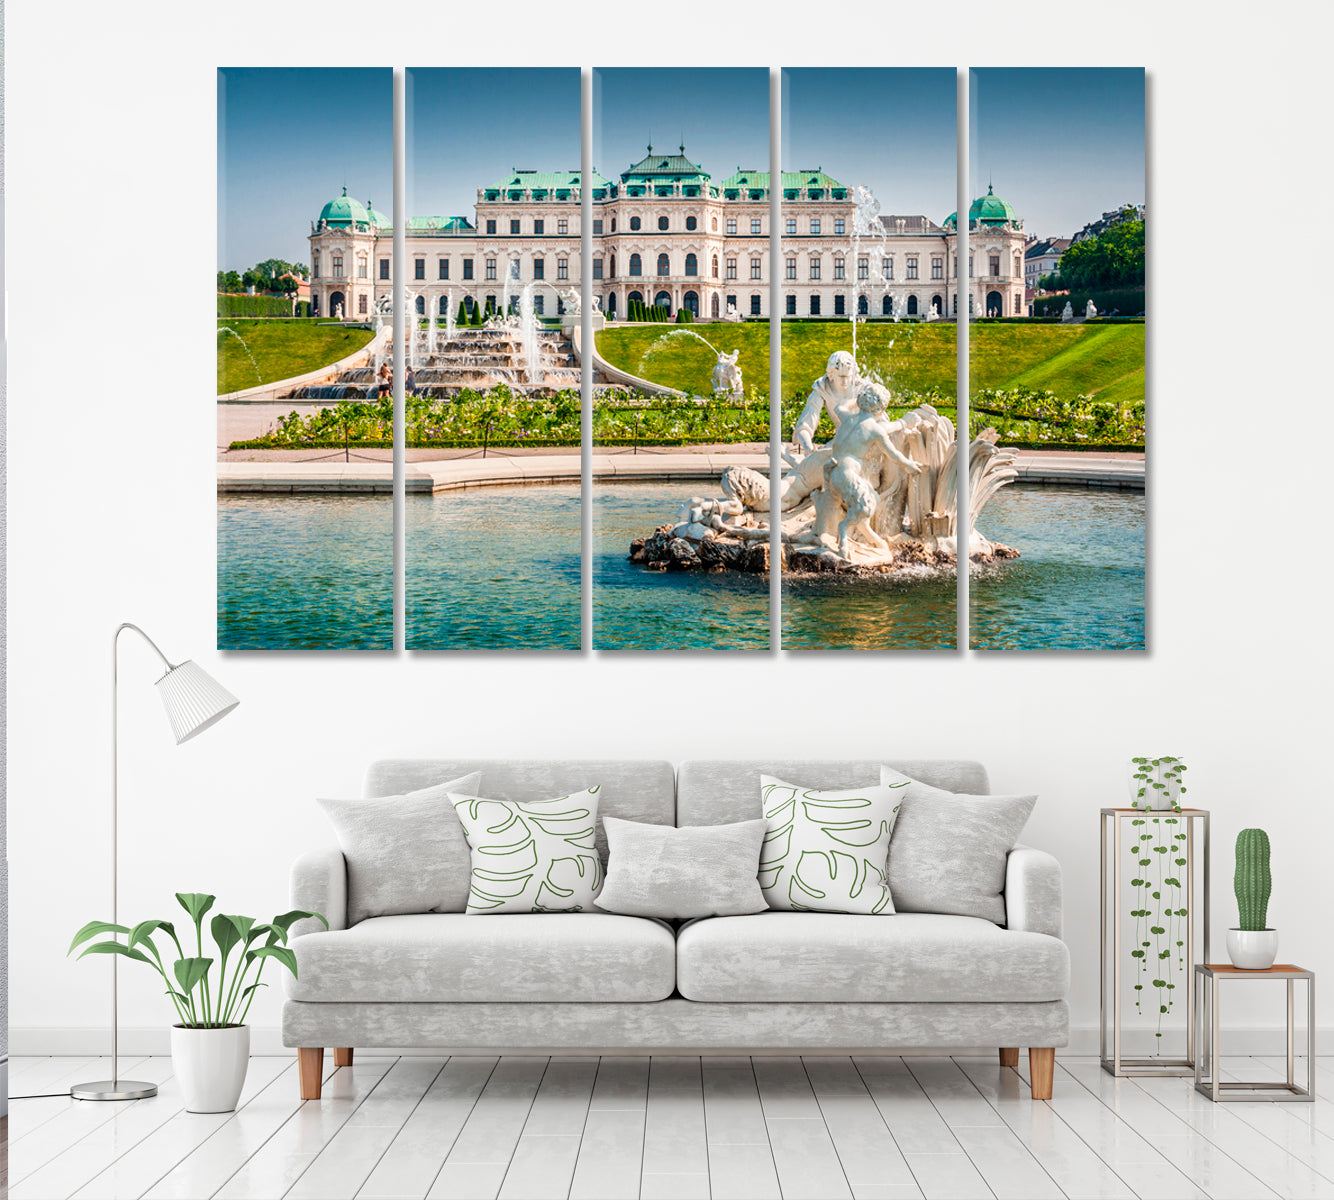 Schloss Belvedere Vienna Austria Canvas Print ArtLexy 5 Panels 36"x24" inches 